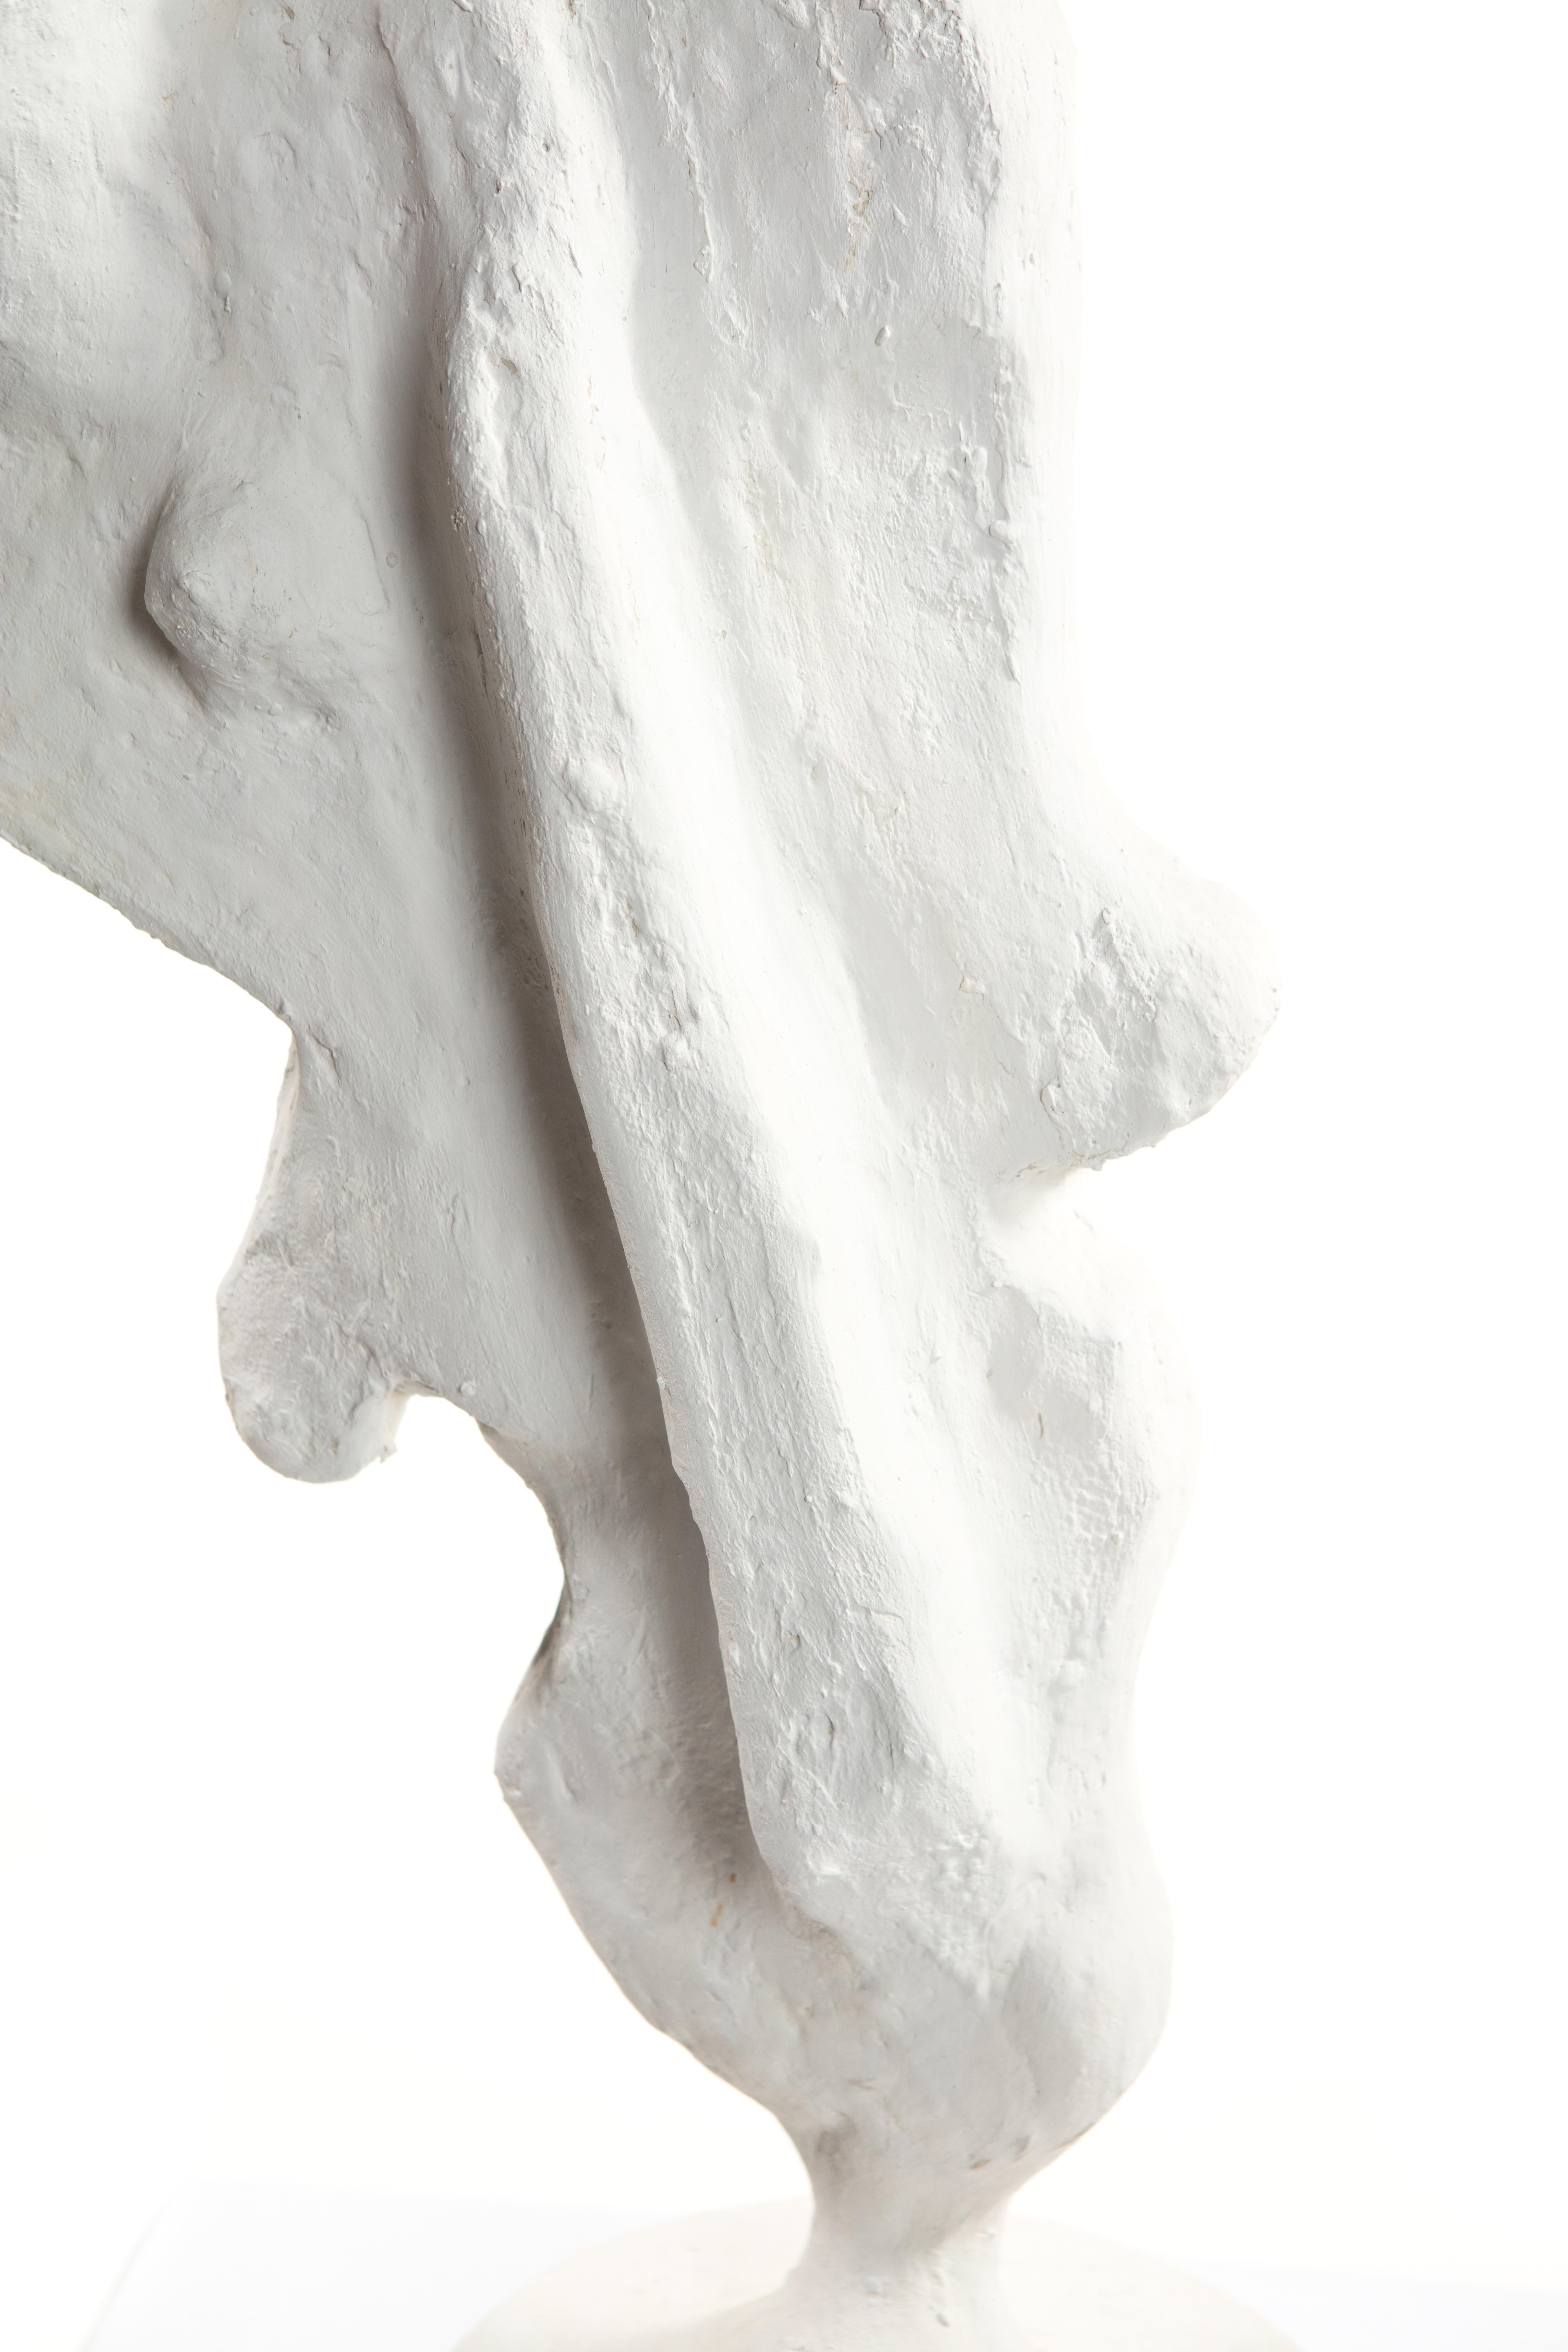 White Plaster Sculptural Table Lamp, 21st Century by Mattia Biagi For Sale 9